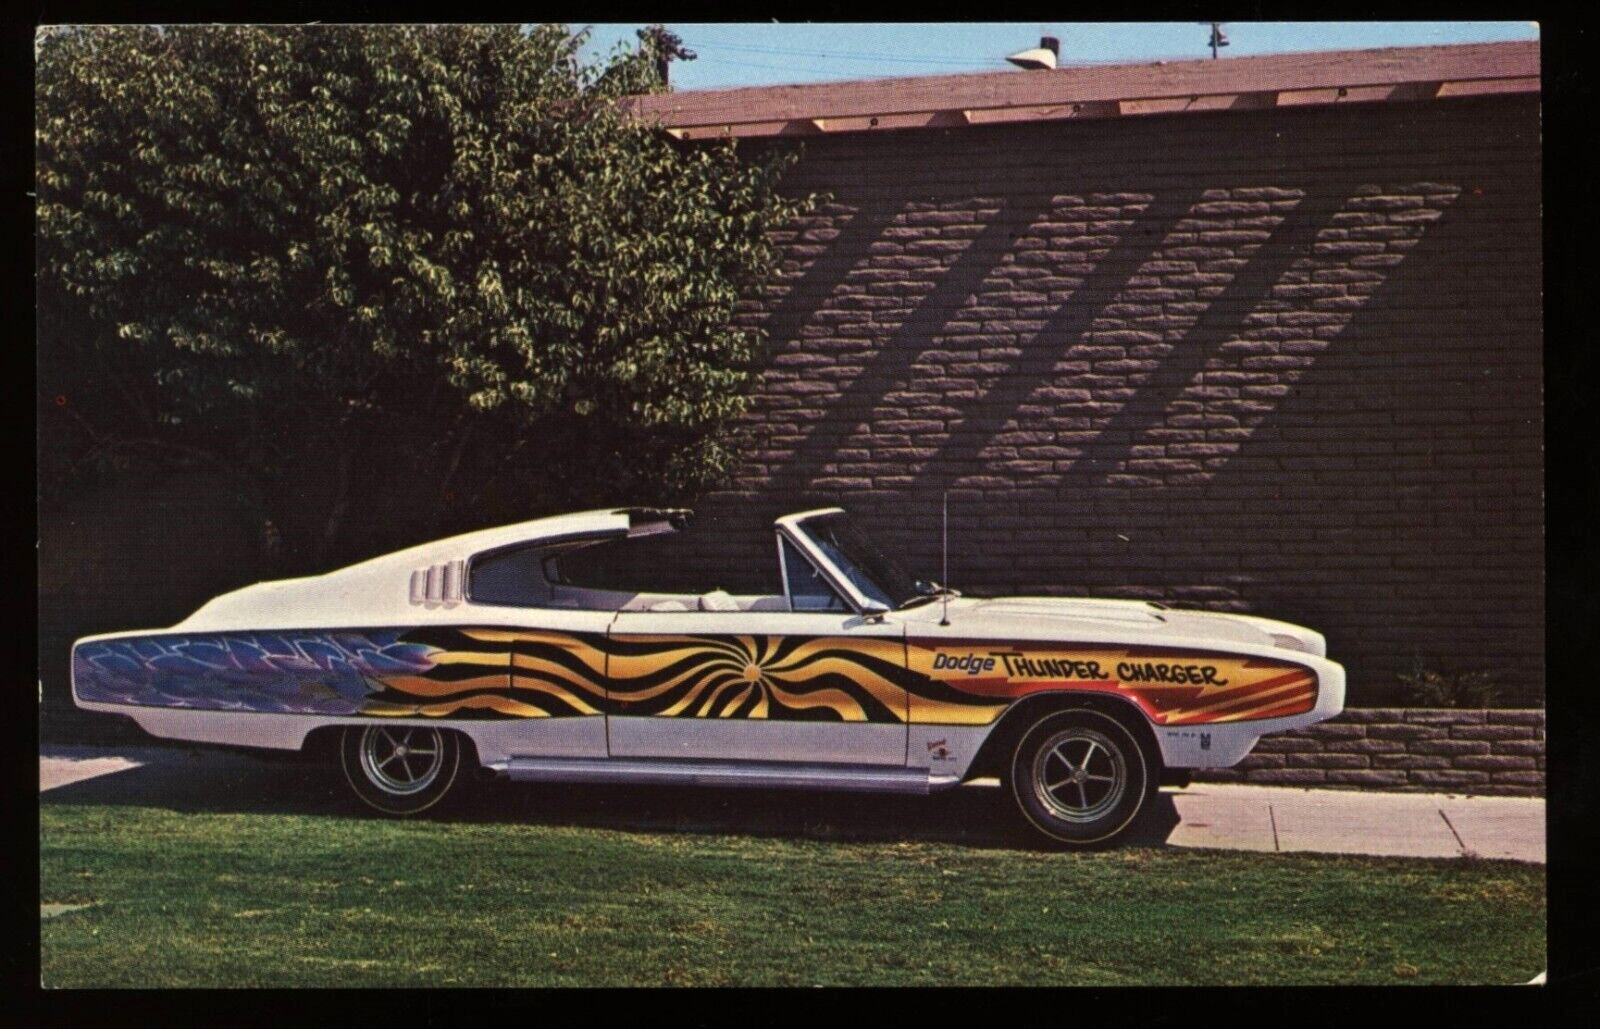 1967 Dodge Thunder Charger \